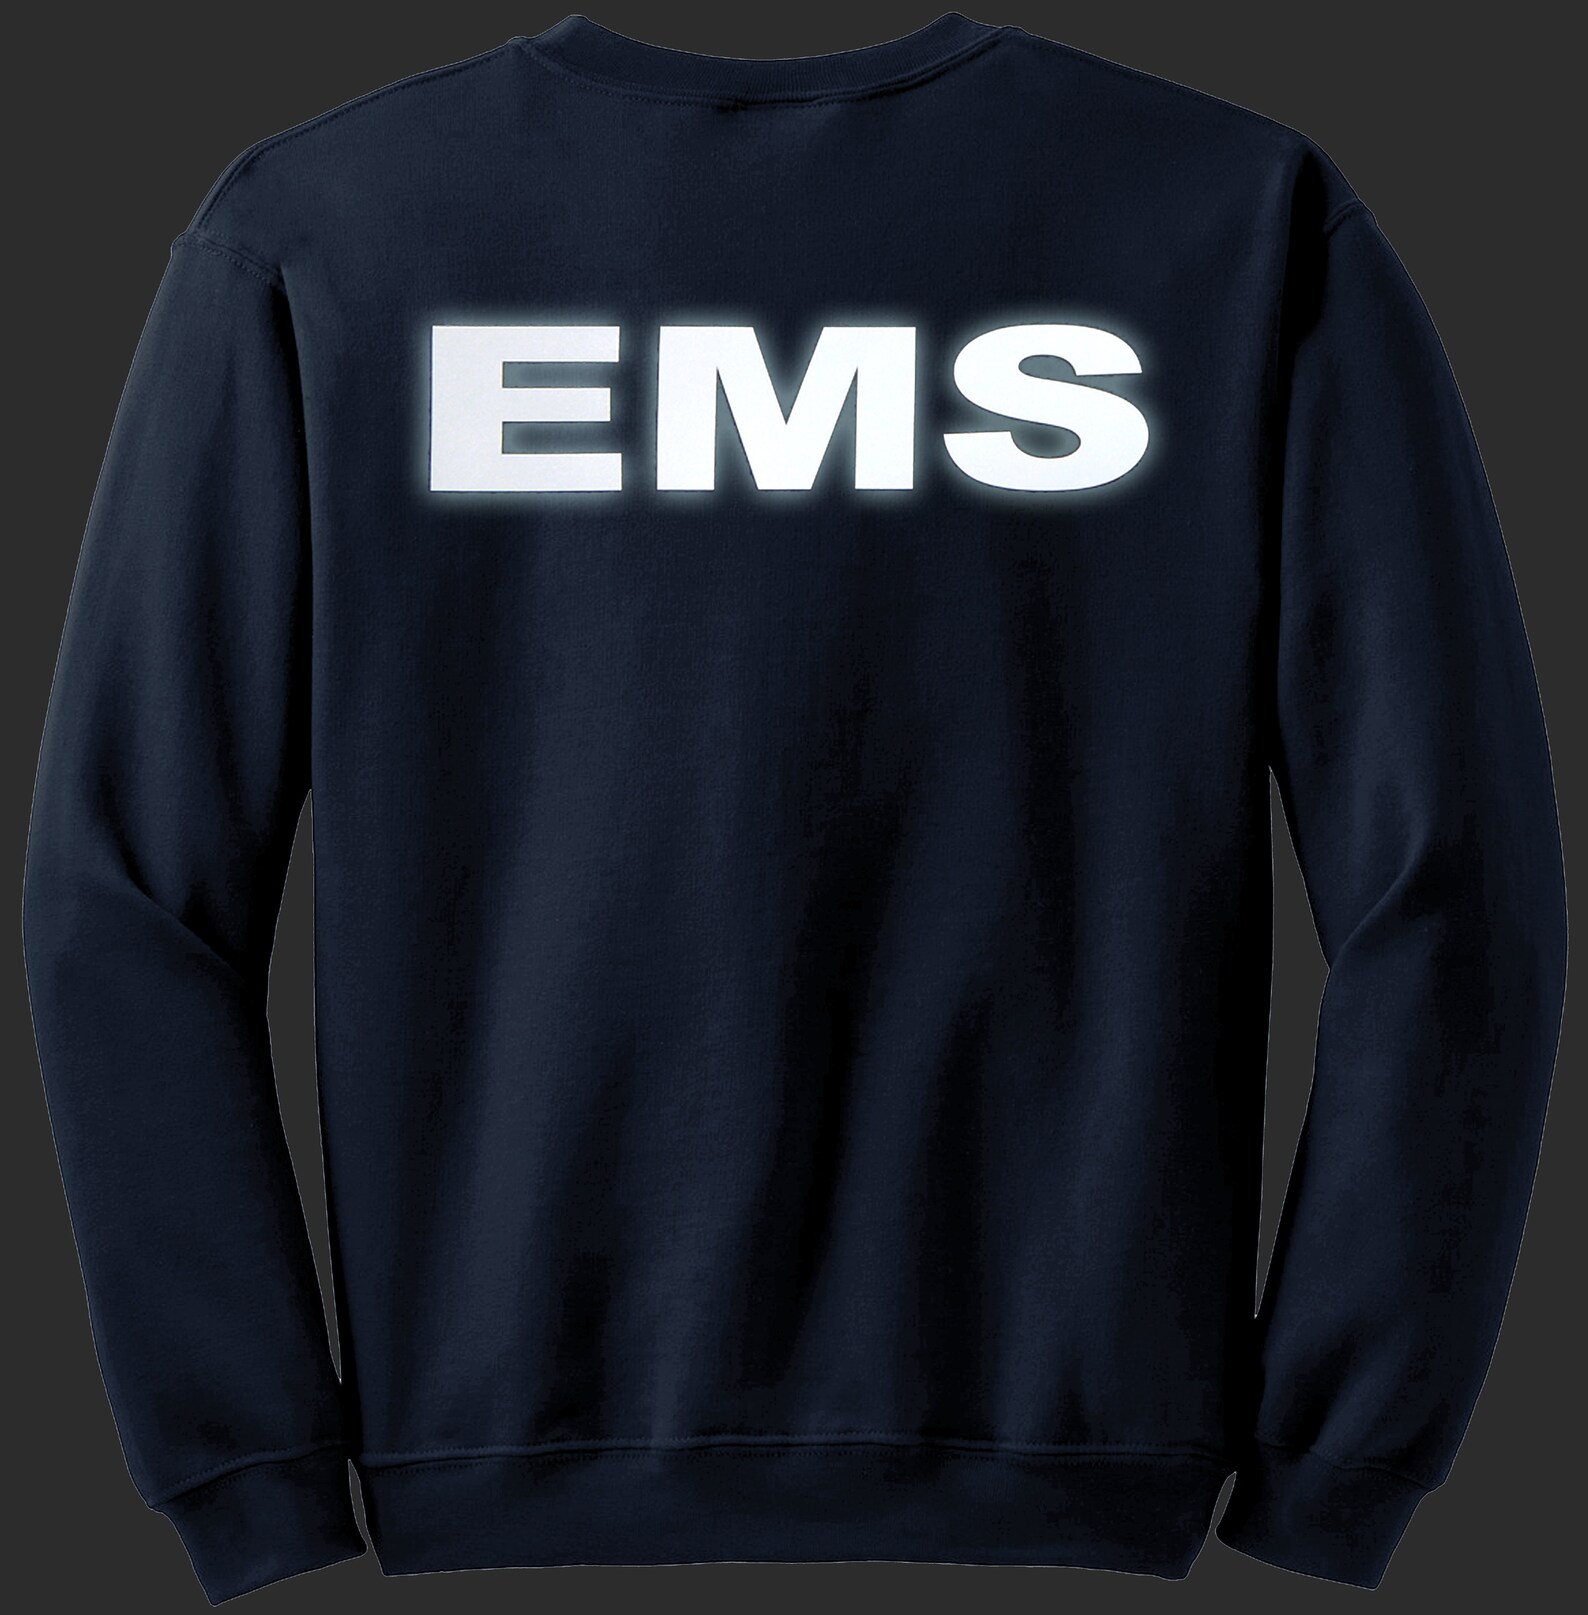 EMS Navy Sweatshirt With REFLECTIVE LOGO Emergency Medical - Etsy